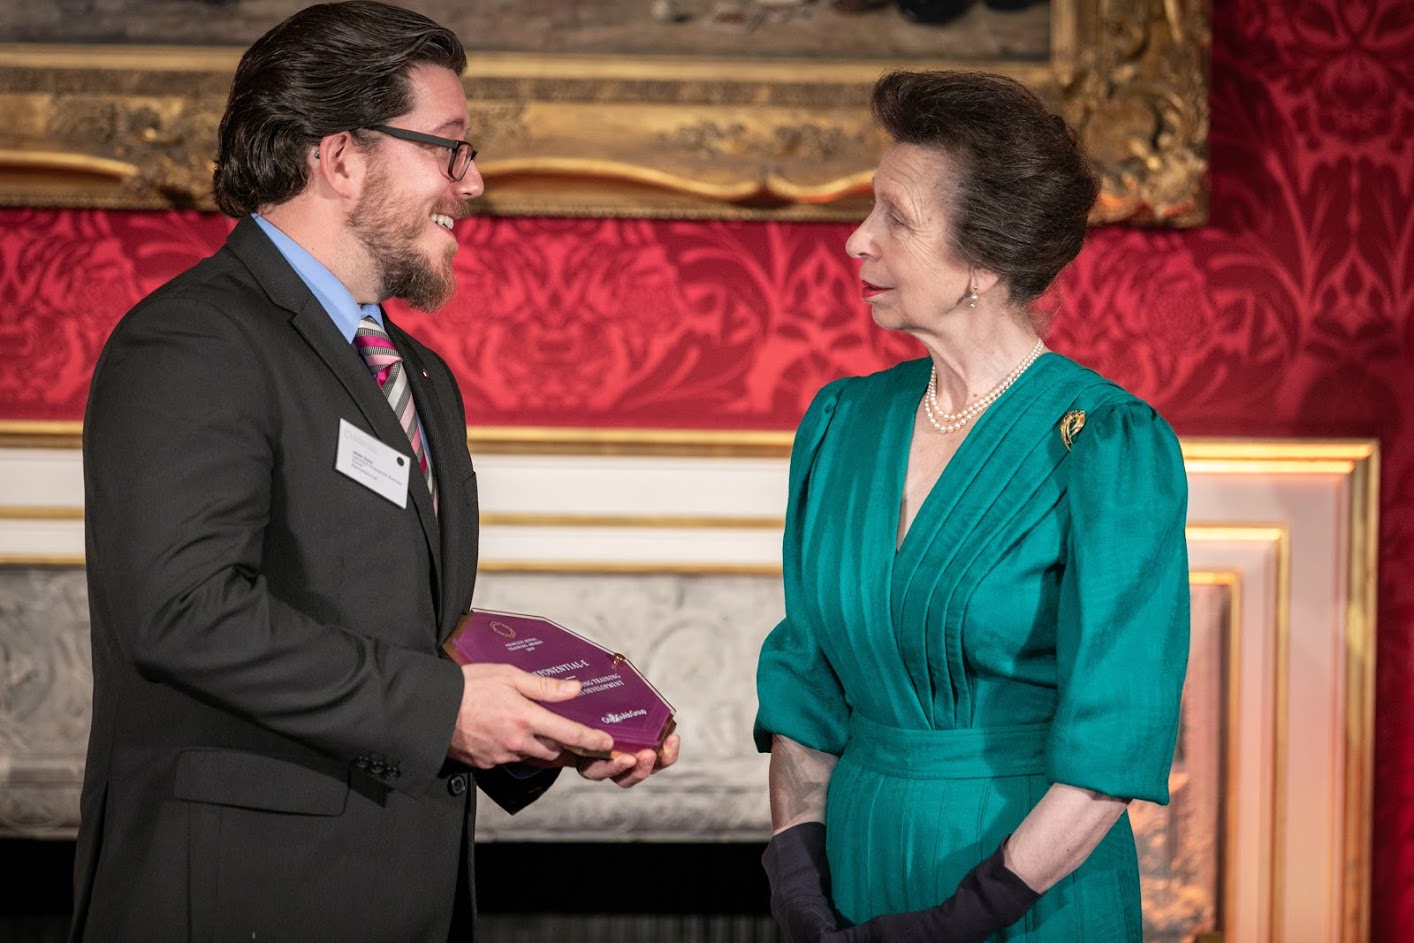 Princess Royal Training Awards Recipient - Laura Thackray Communications